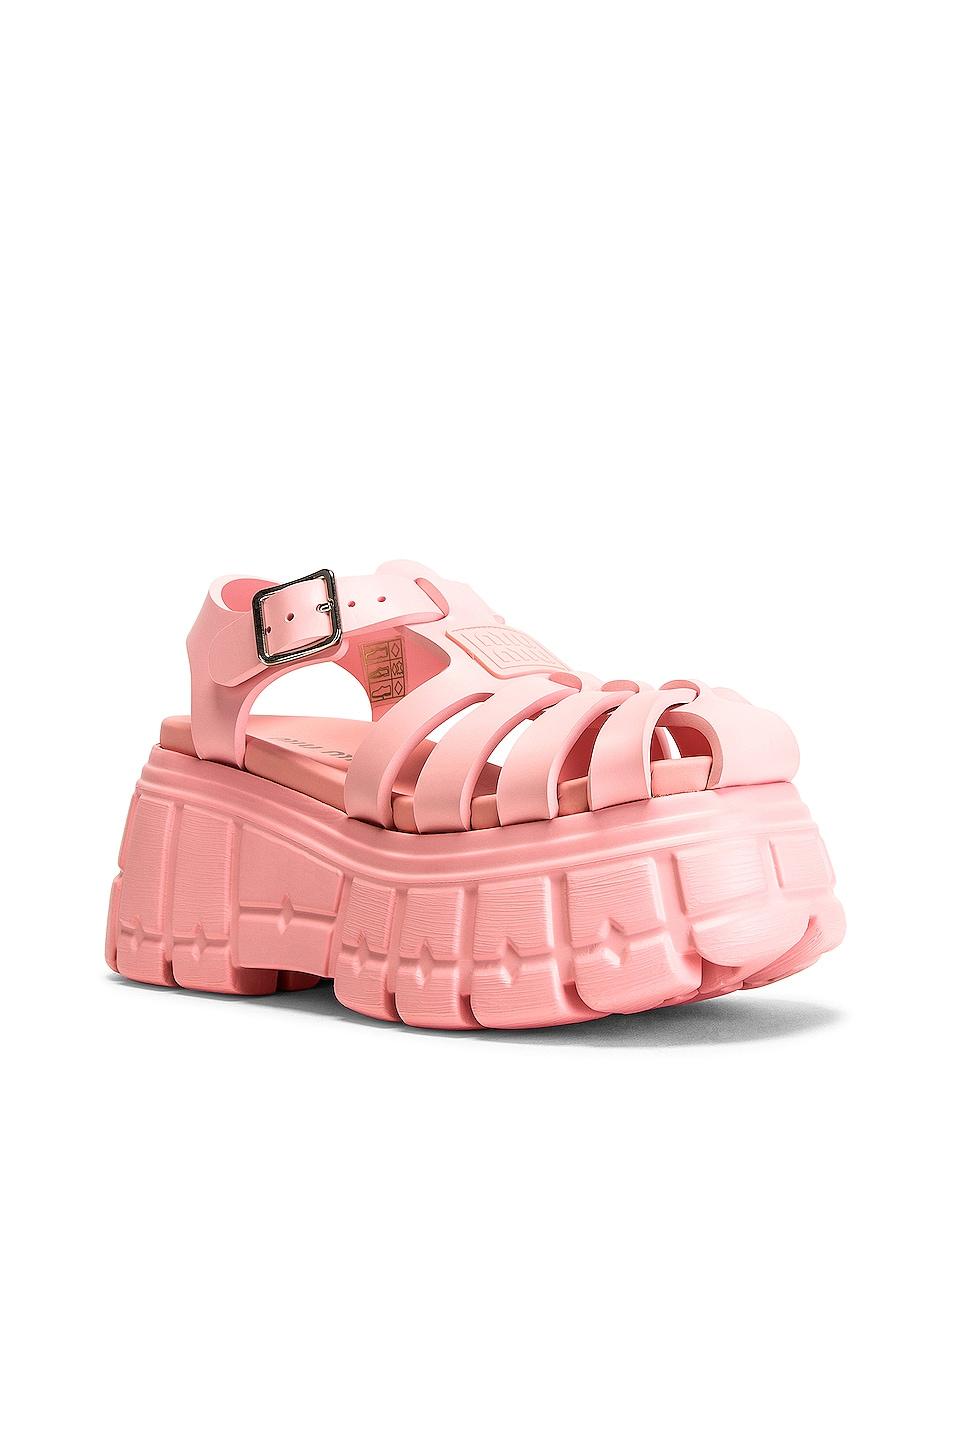 Miu Miu Soft Cage Platform Sandals in Pink | Lyst